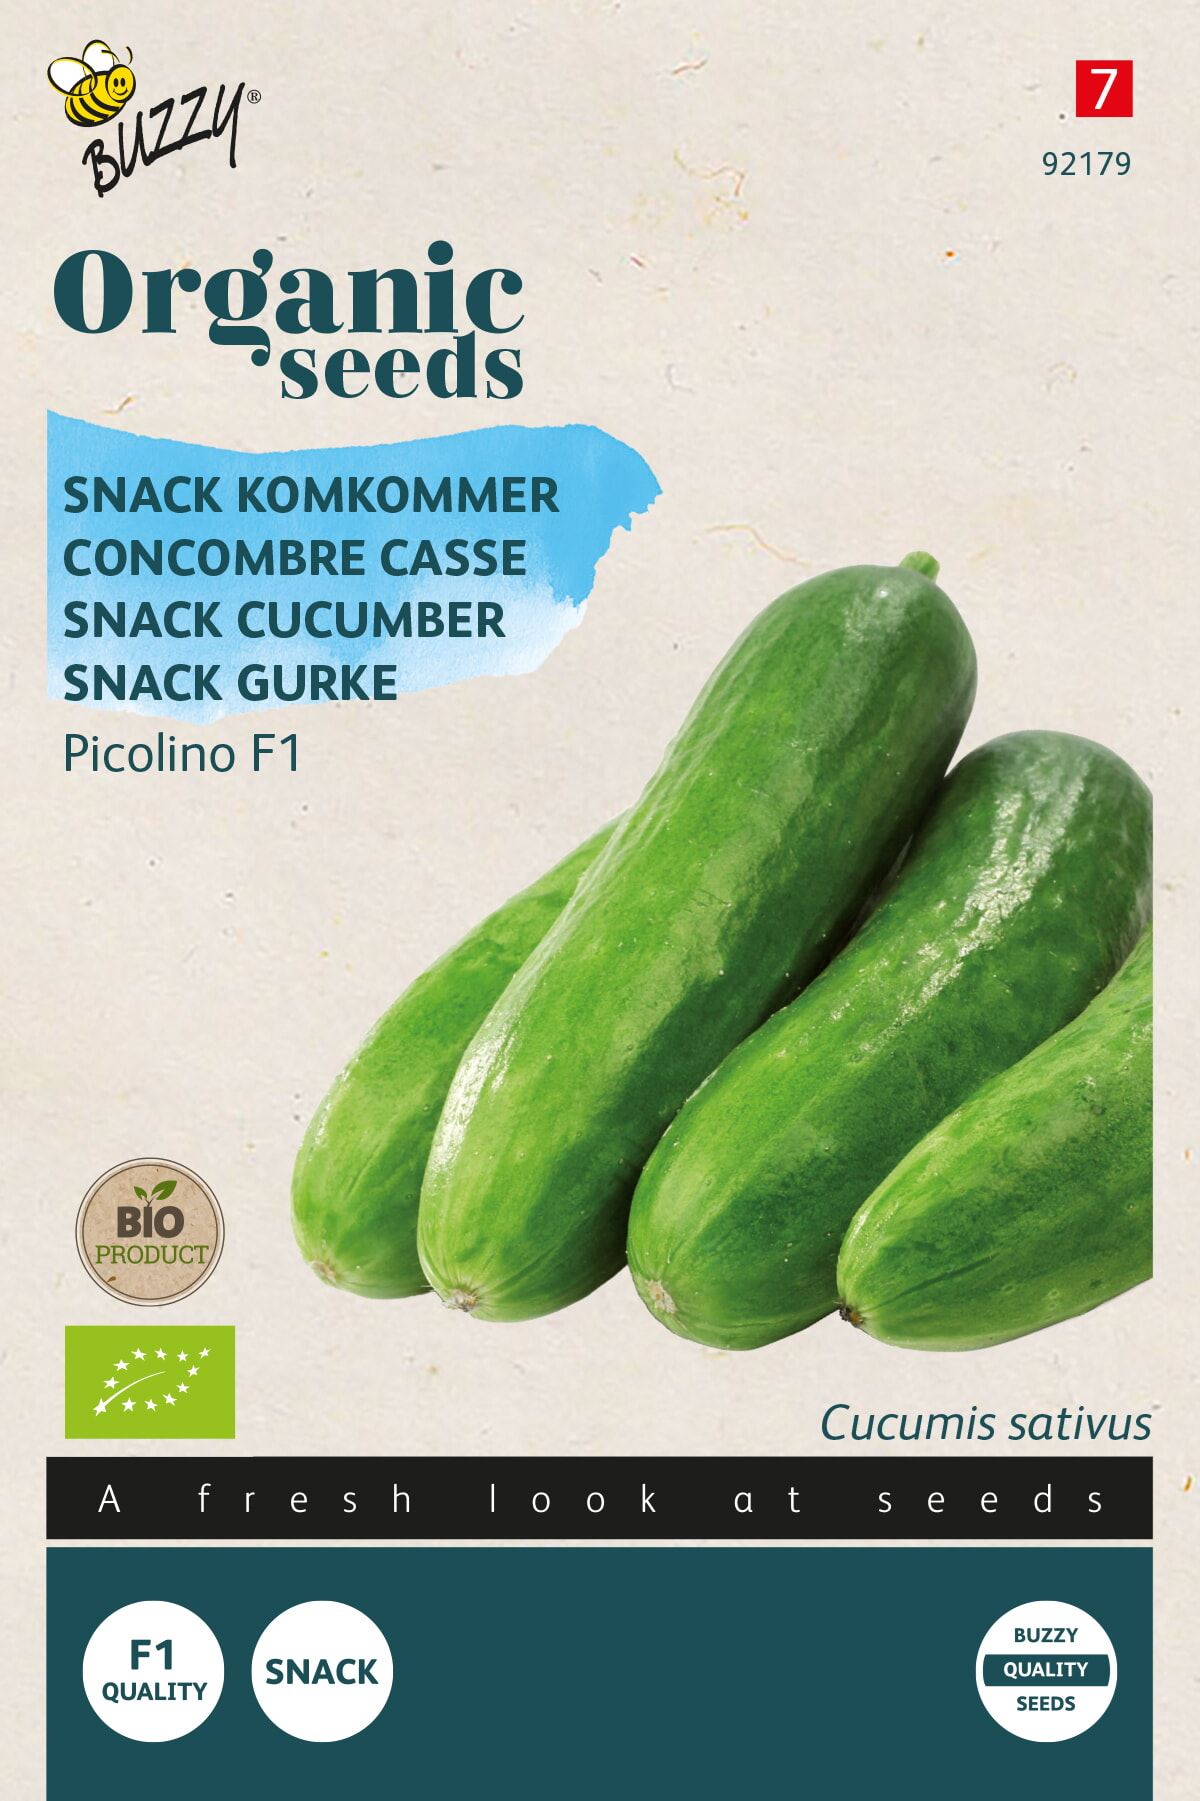 Buzzy&#174; Organic seeds snack cucumber Picolino (BIO)